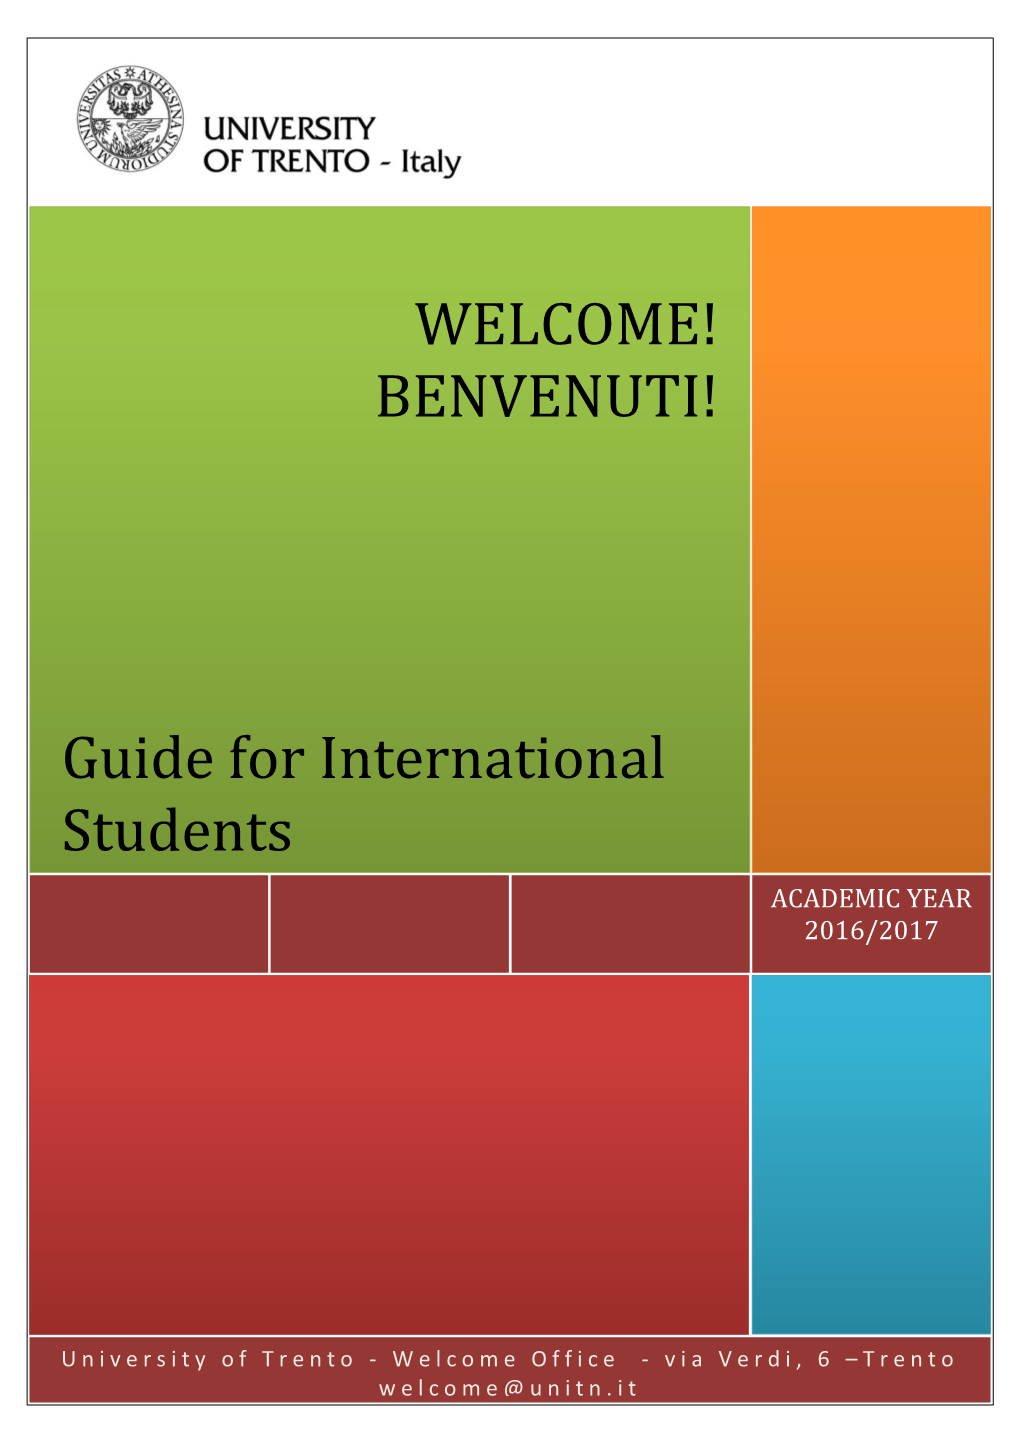 WELCOME! BENVENUTI! Guide for International Students